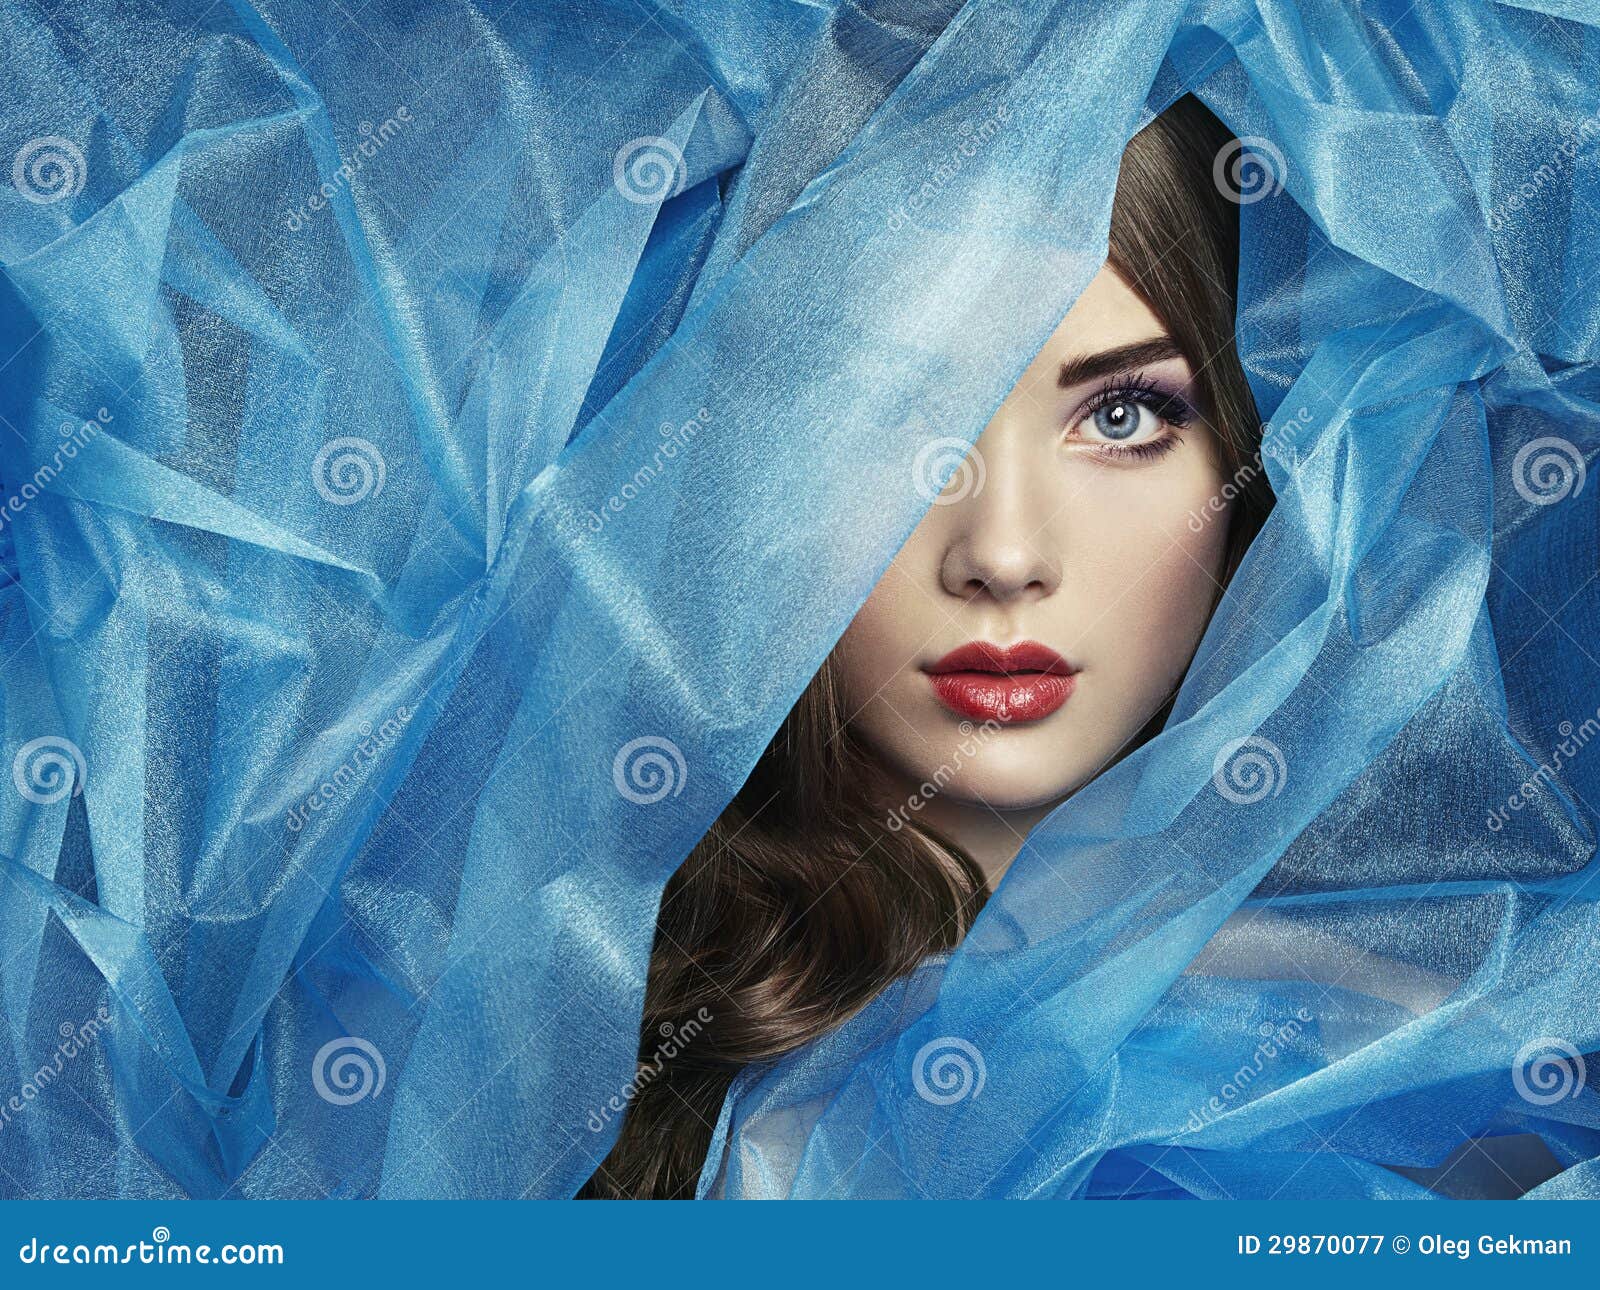 fashion photo of beautiful women under blue veil